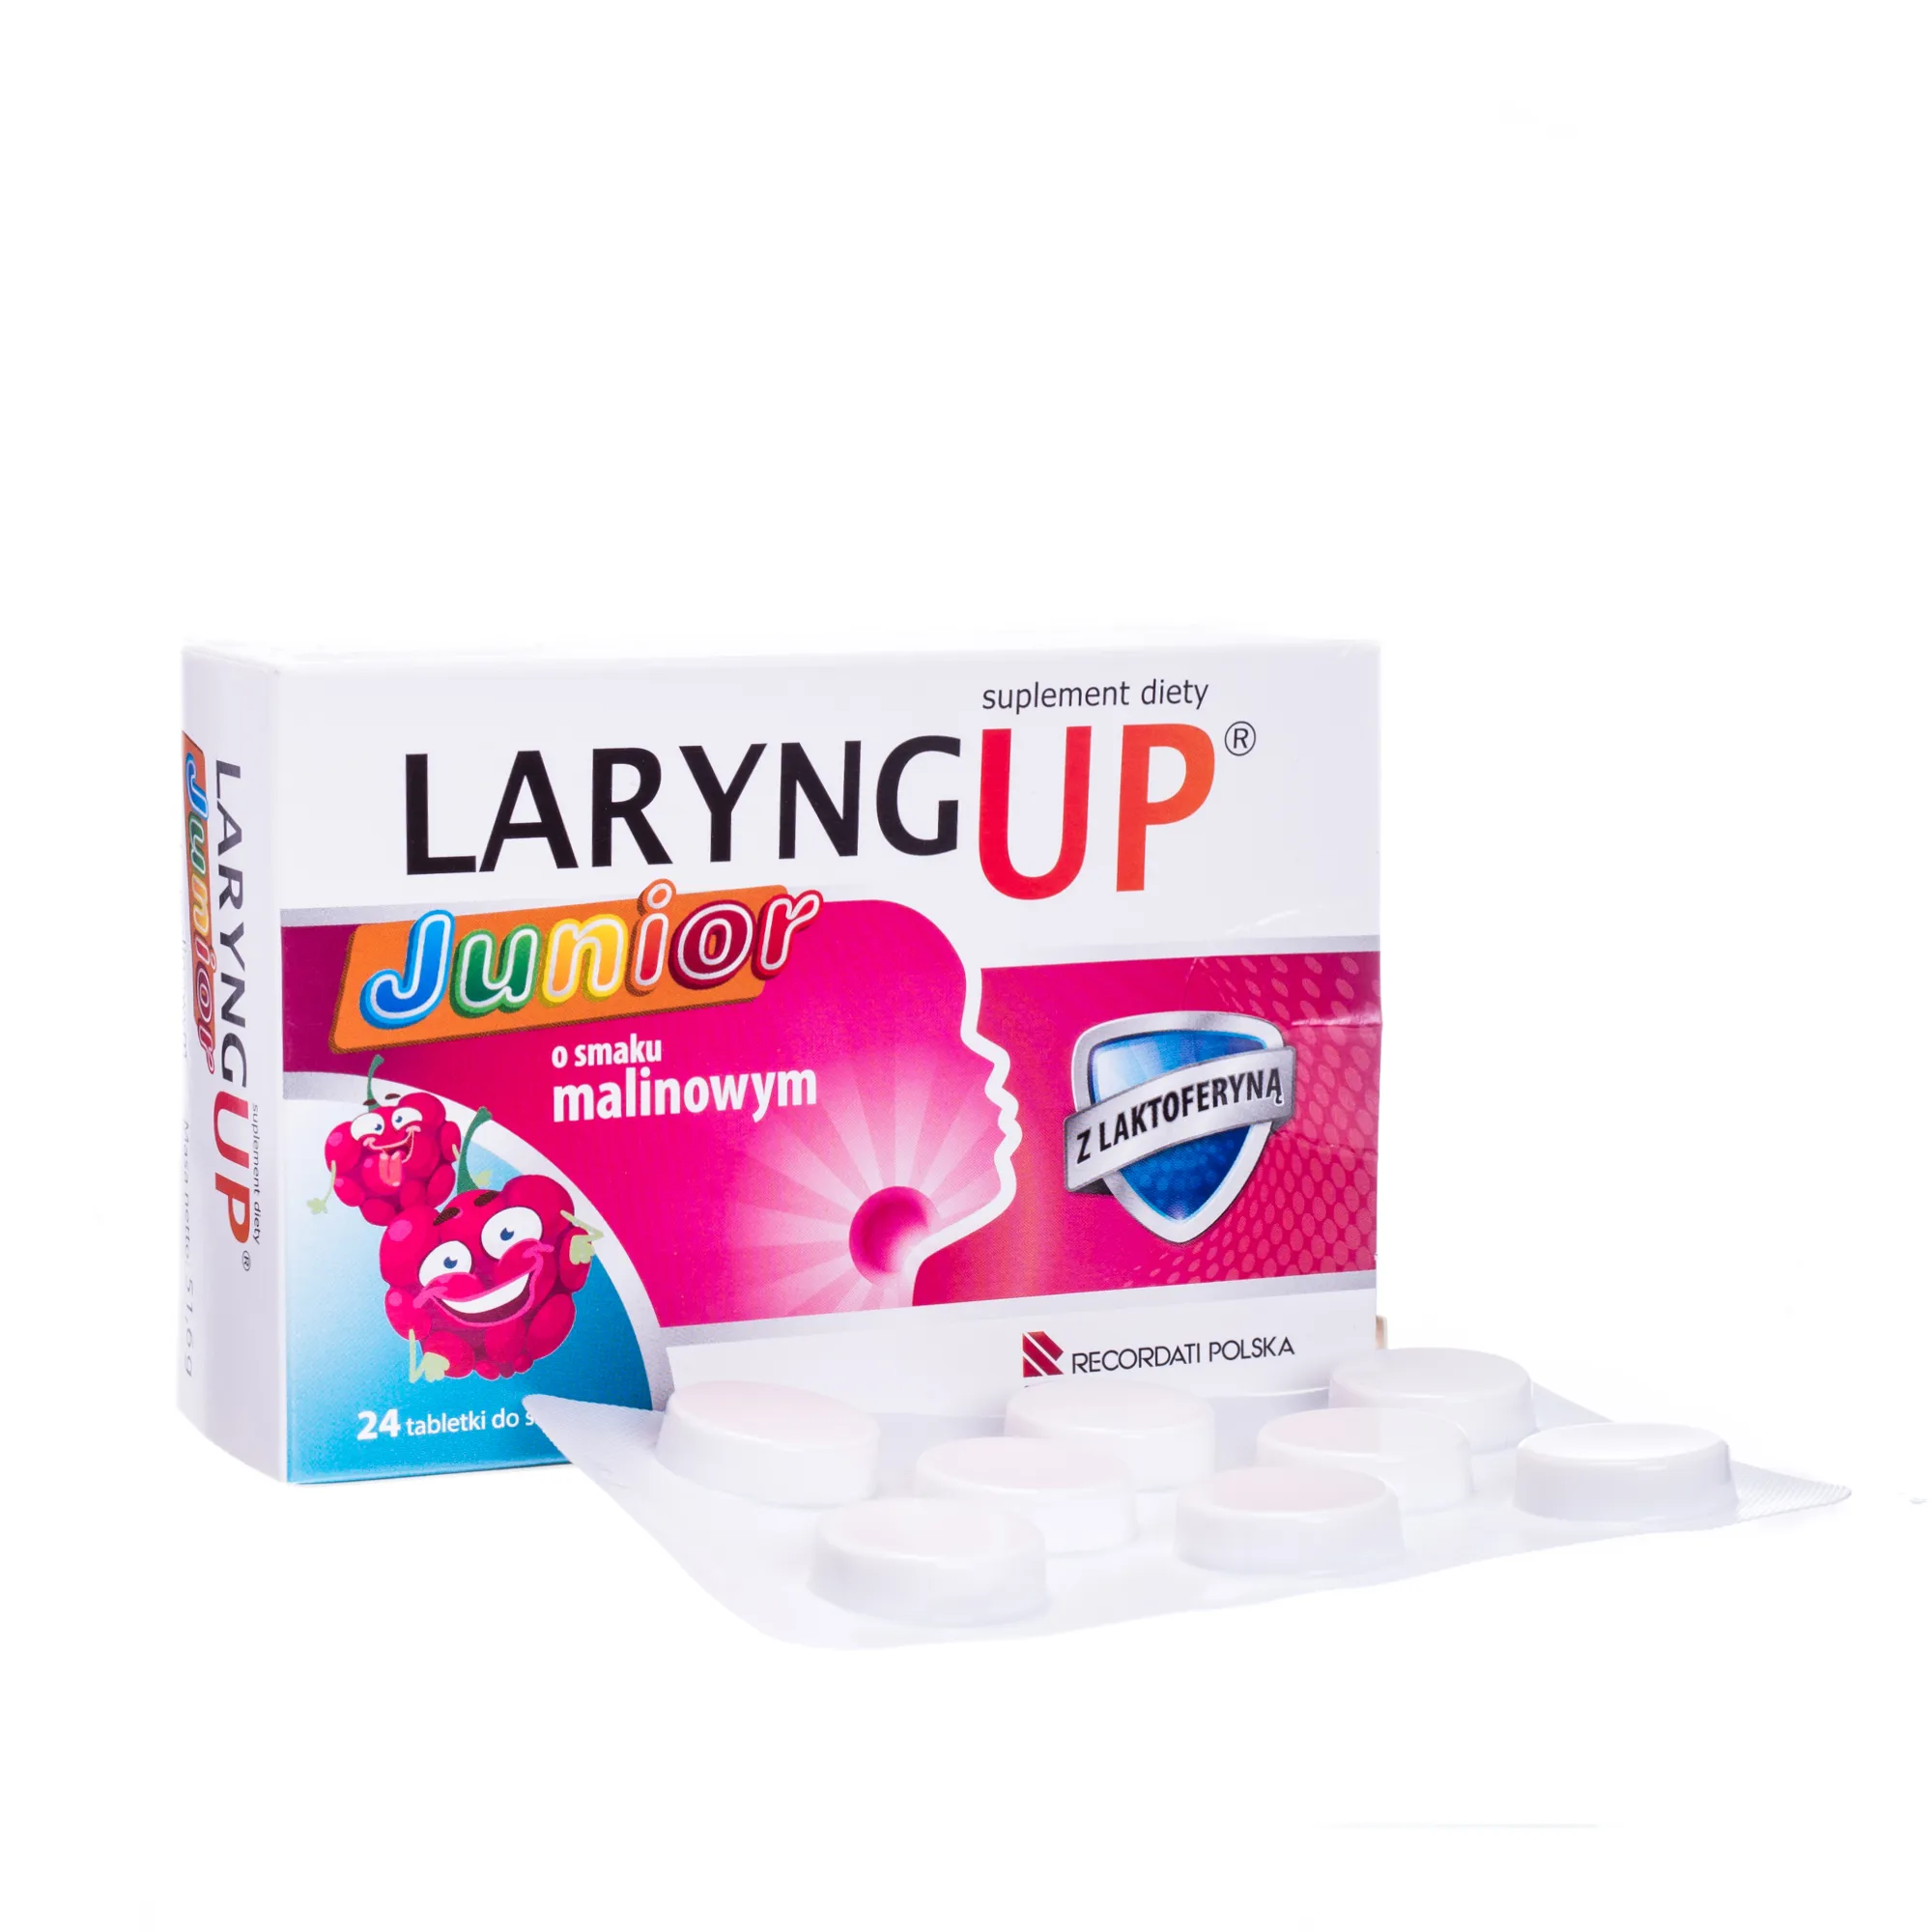 Laryng Up Junior, suplement diety, smak malinowym, 24 tabletki do ssania 